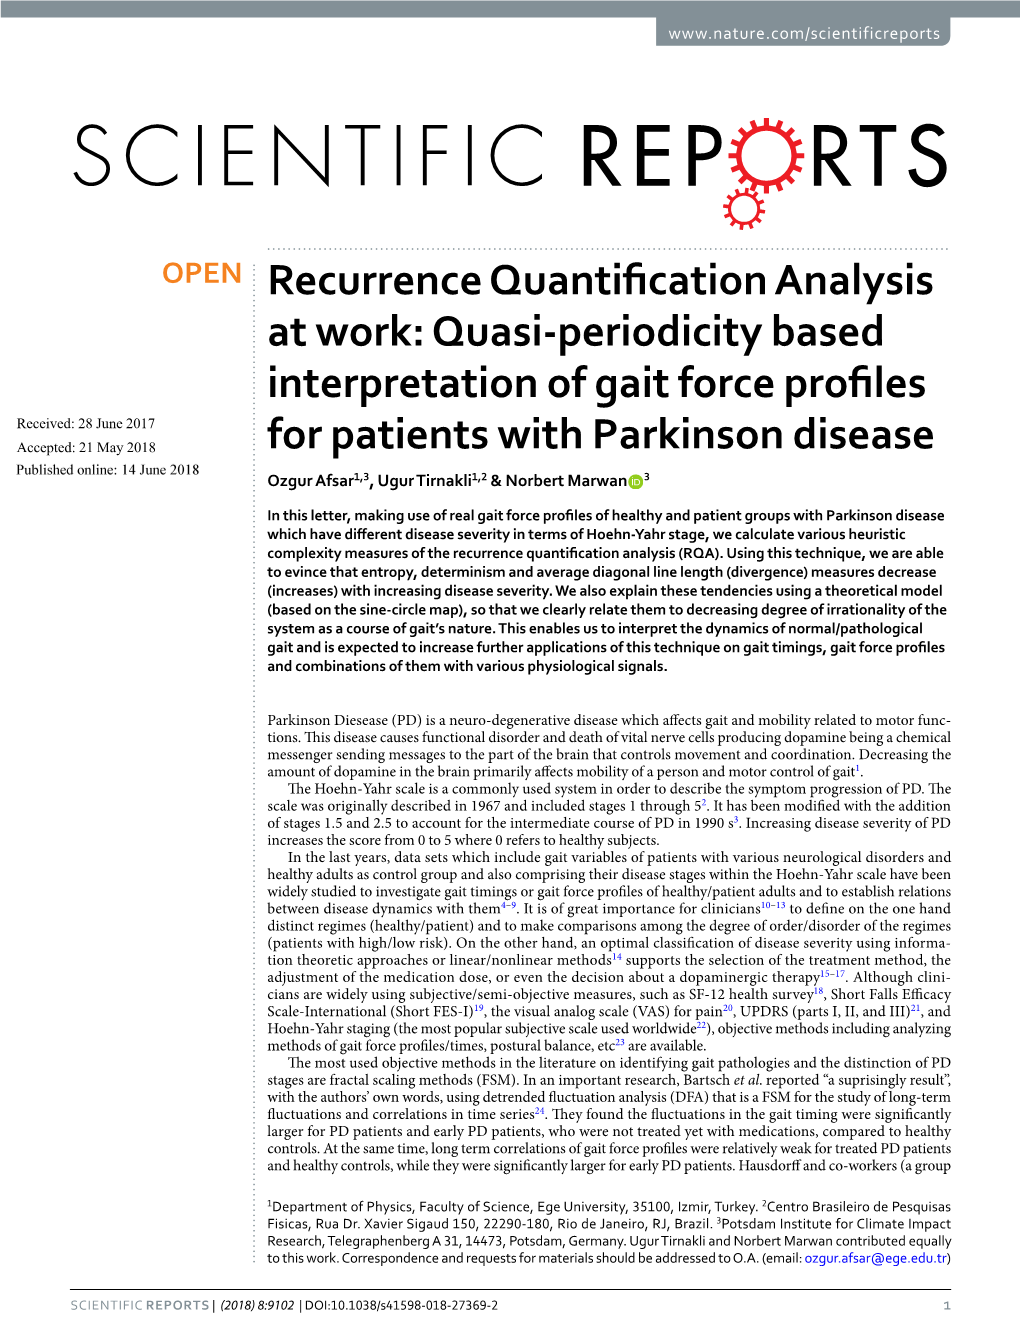 Recurrence Quantification Analysis at Work: Quasi-Periodicity Based